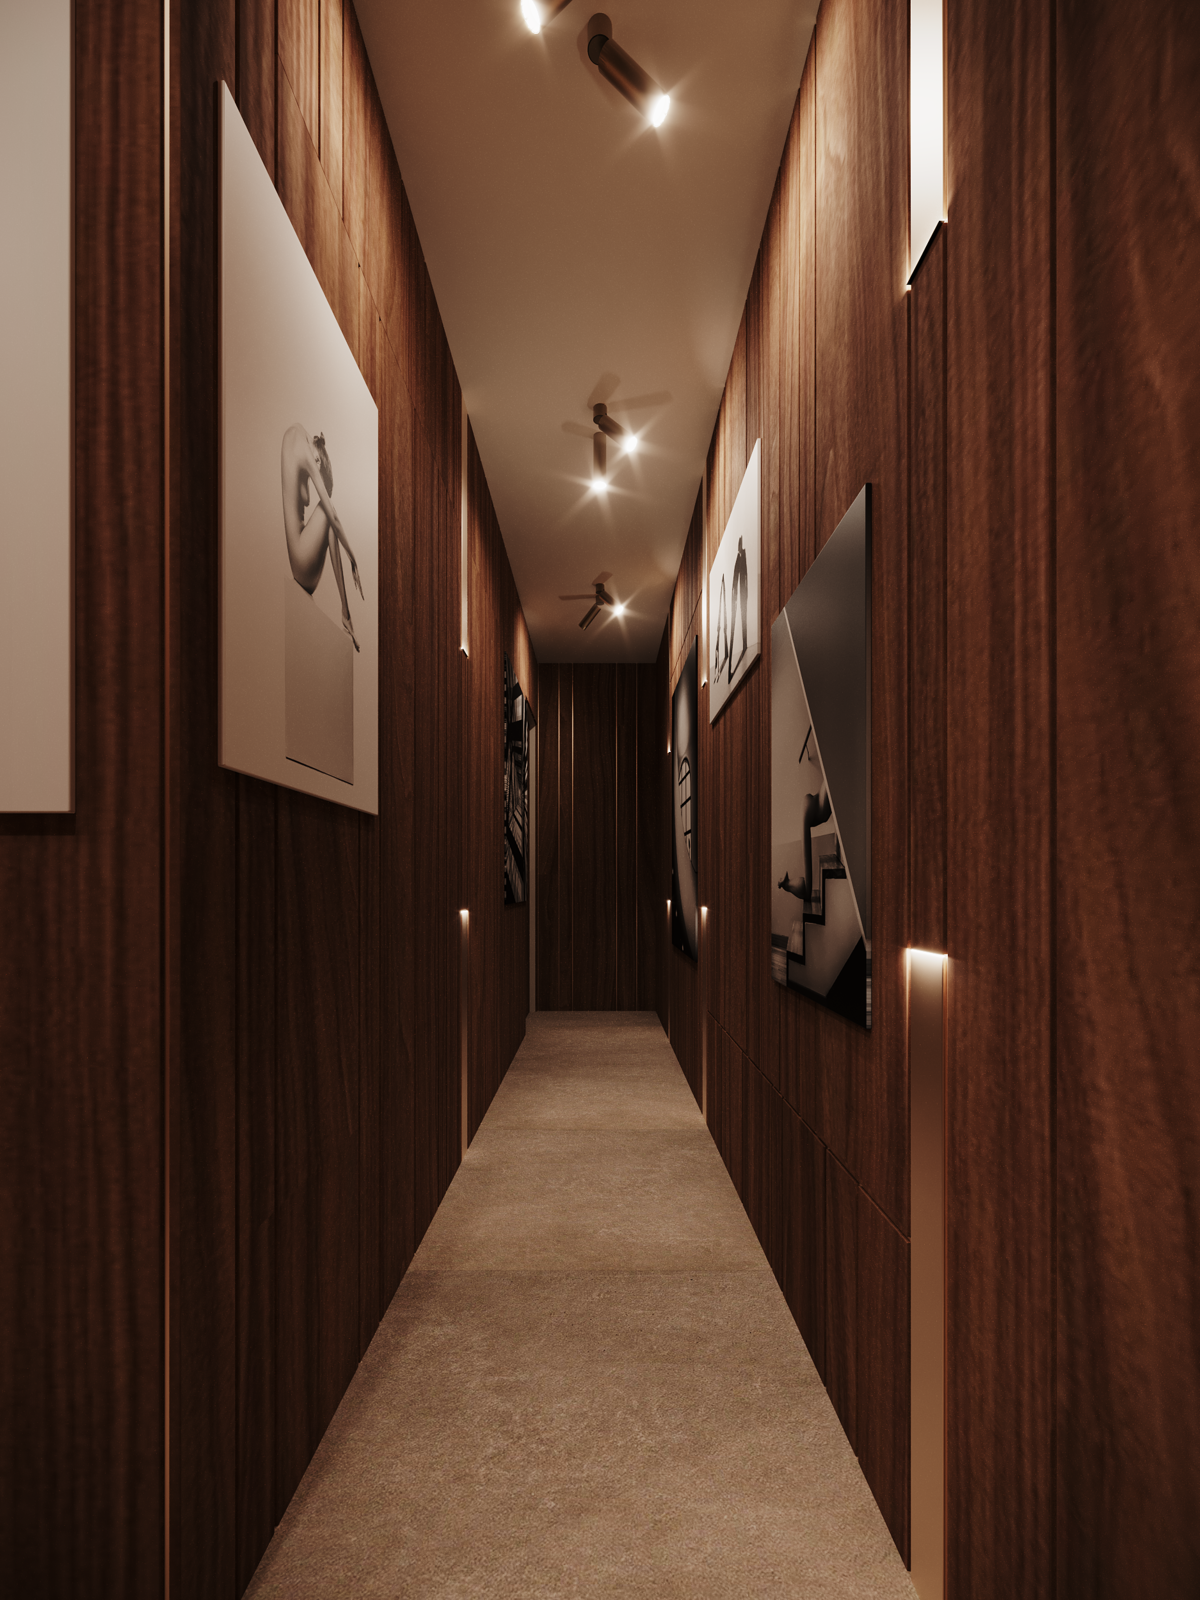 Corridor with art pieces